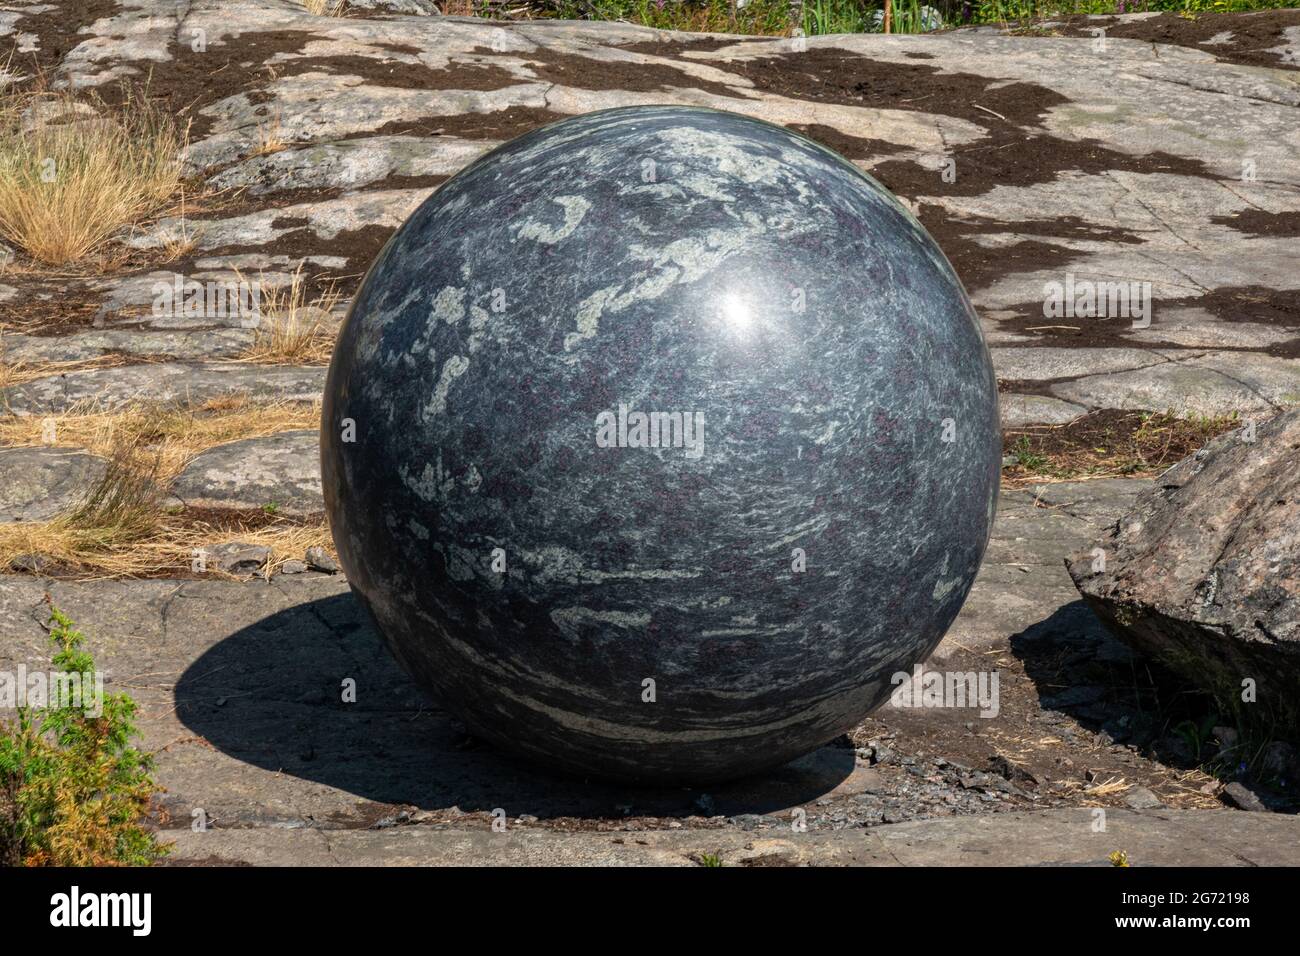 Large stone globe, part of Pars Pro Toto sculpture by Alicja Kwade, at Helsinki Biennial 2021 art event in Vallisaari Island of Helsinki, Finland Stock Photo